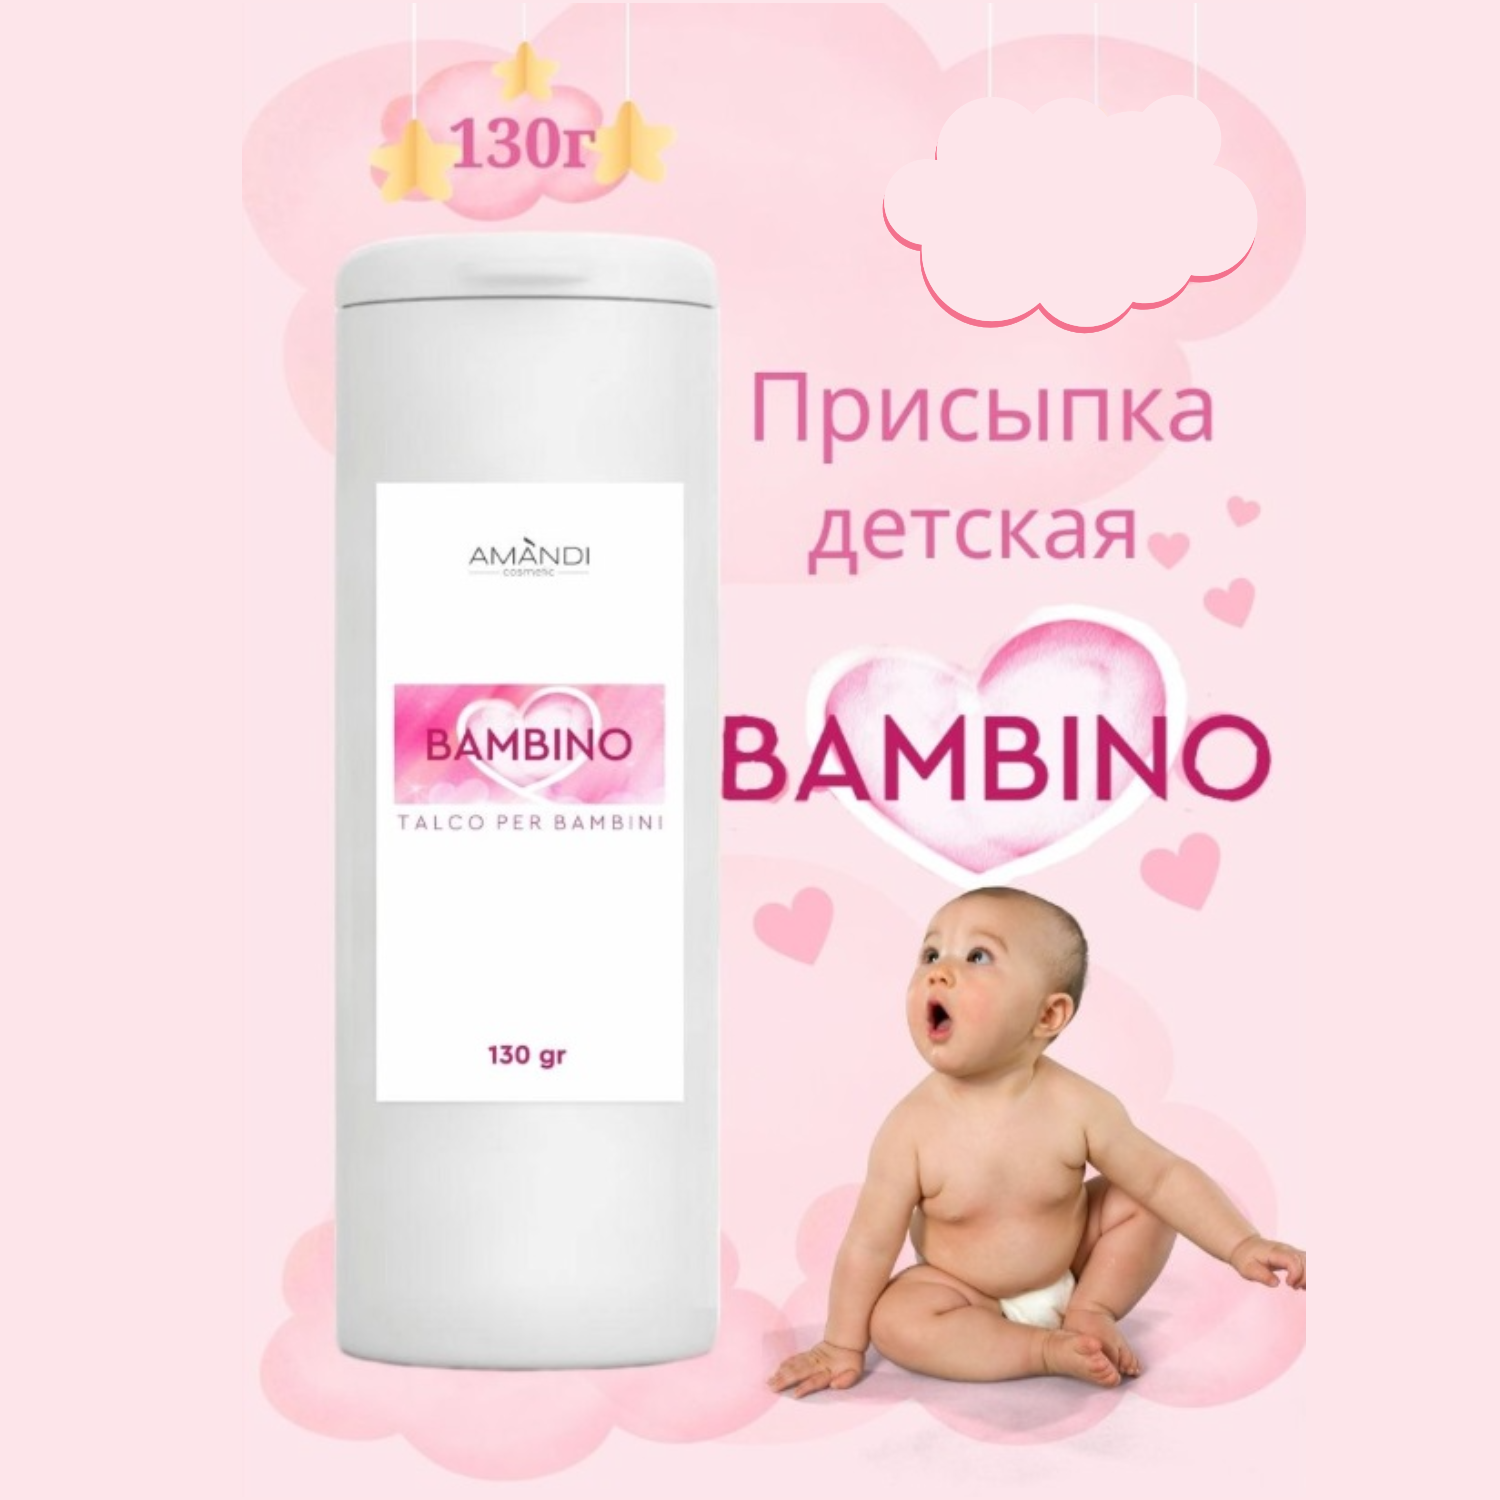 Присыпка детская AMANDI BAMBINO набор без отдушки и с ароматом банана 2 шт по 130 грамм - фото 2